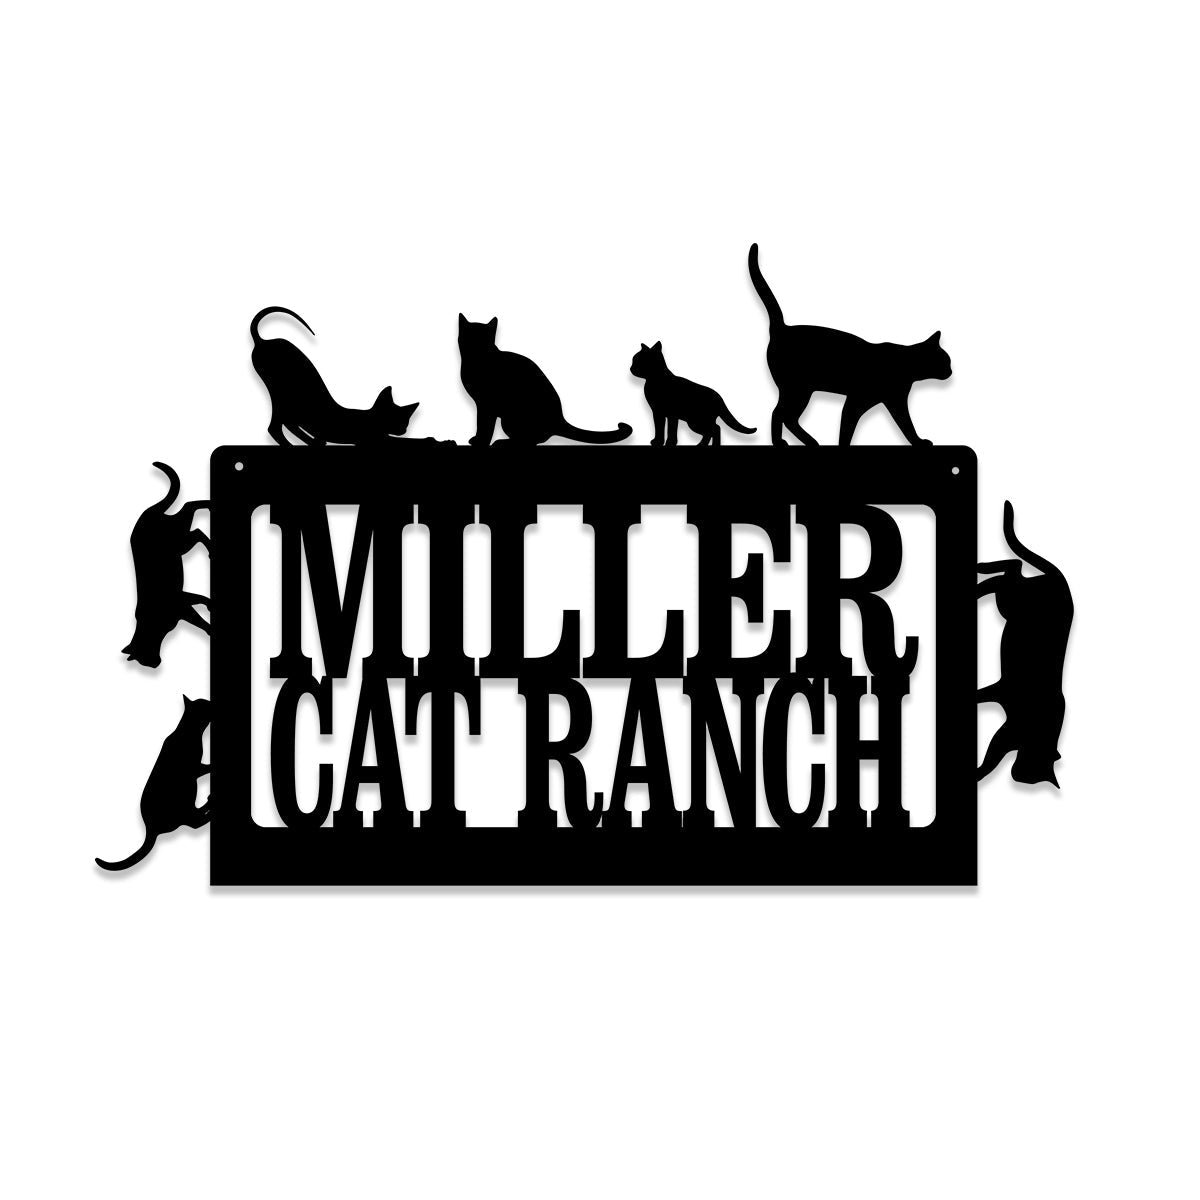 Personalized Cat Ranch Metal Sign, Custom Pet Housewarming